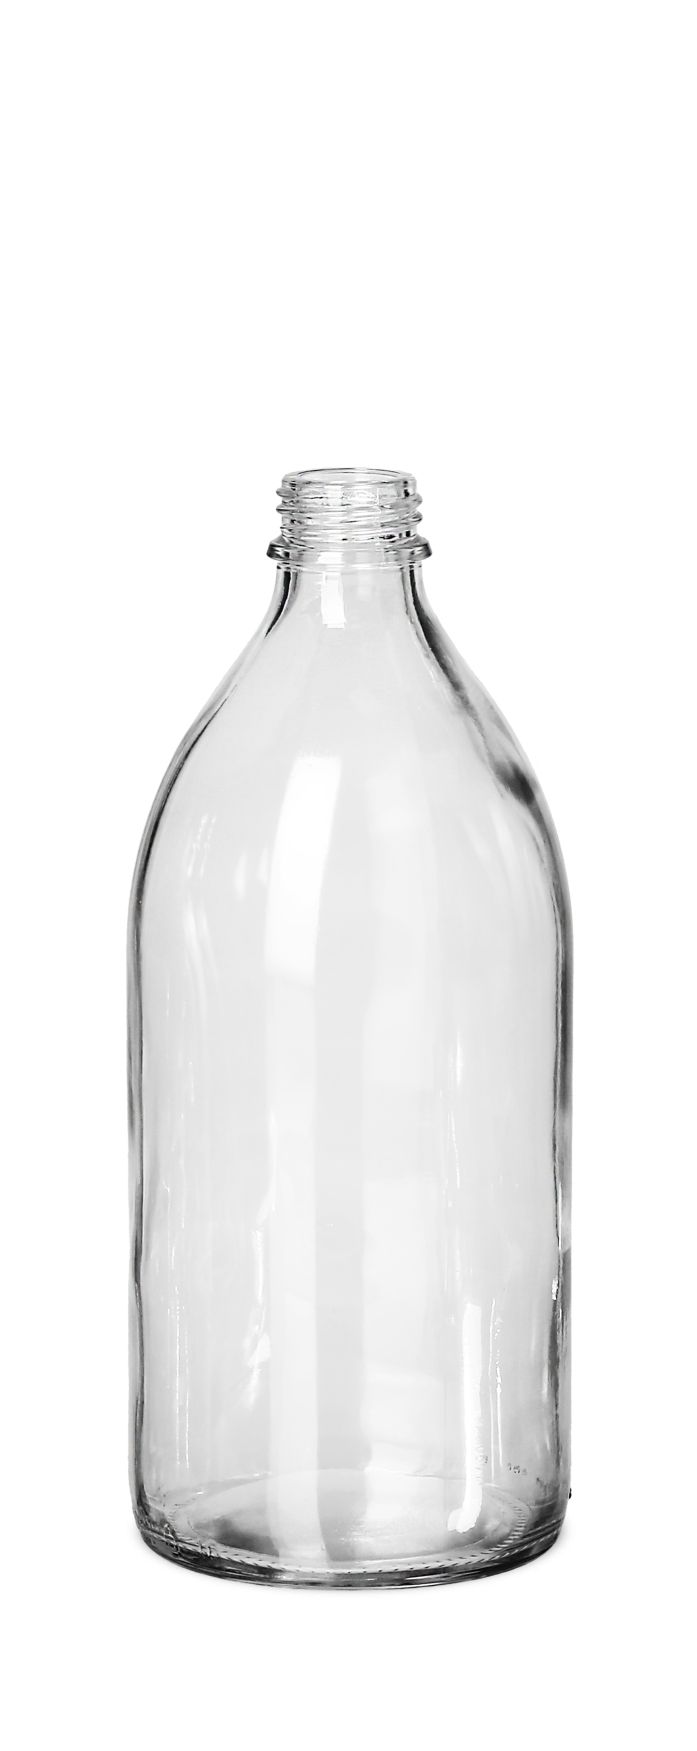 500 ml bottle series standard packaging bottle